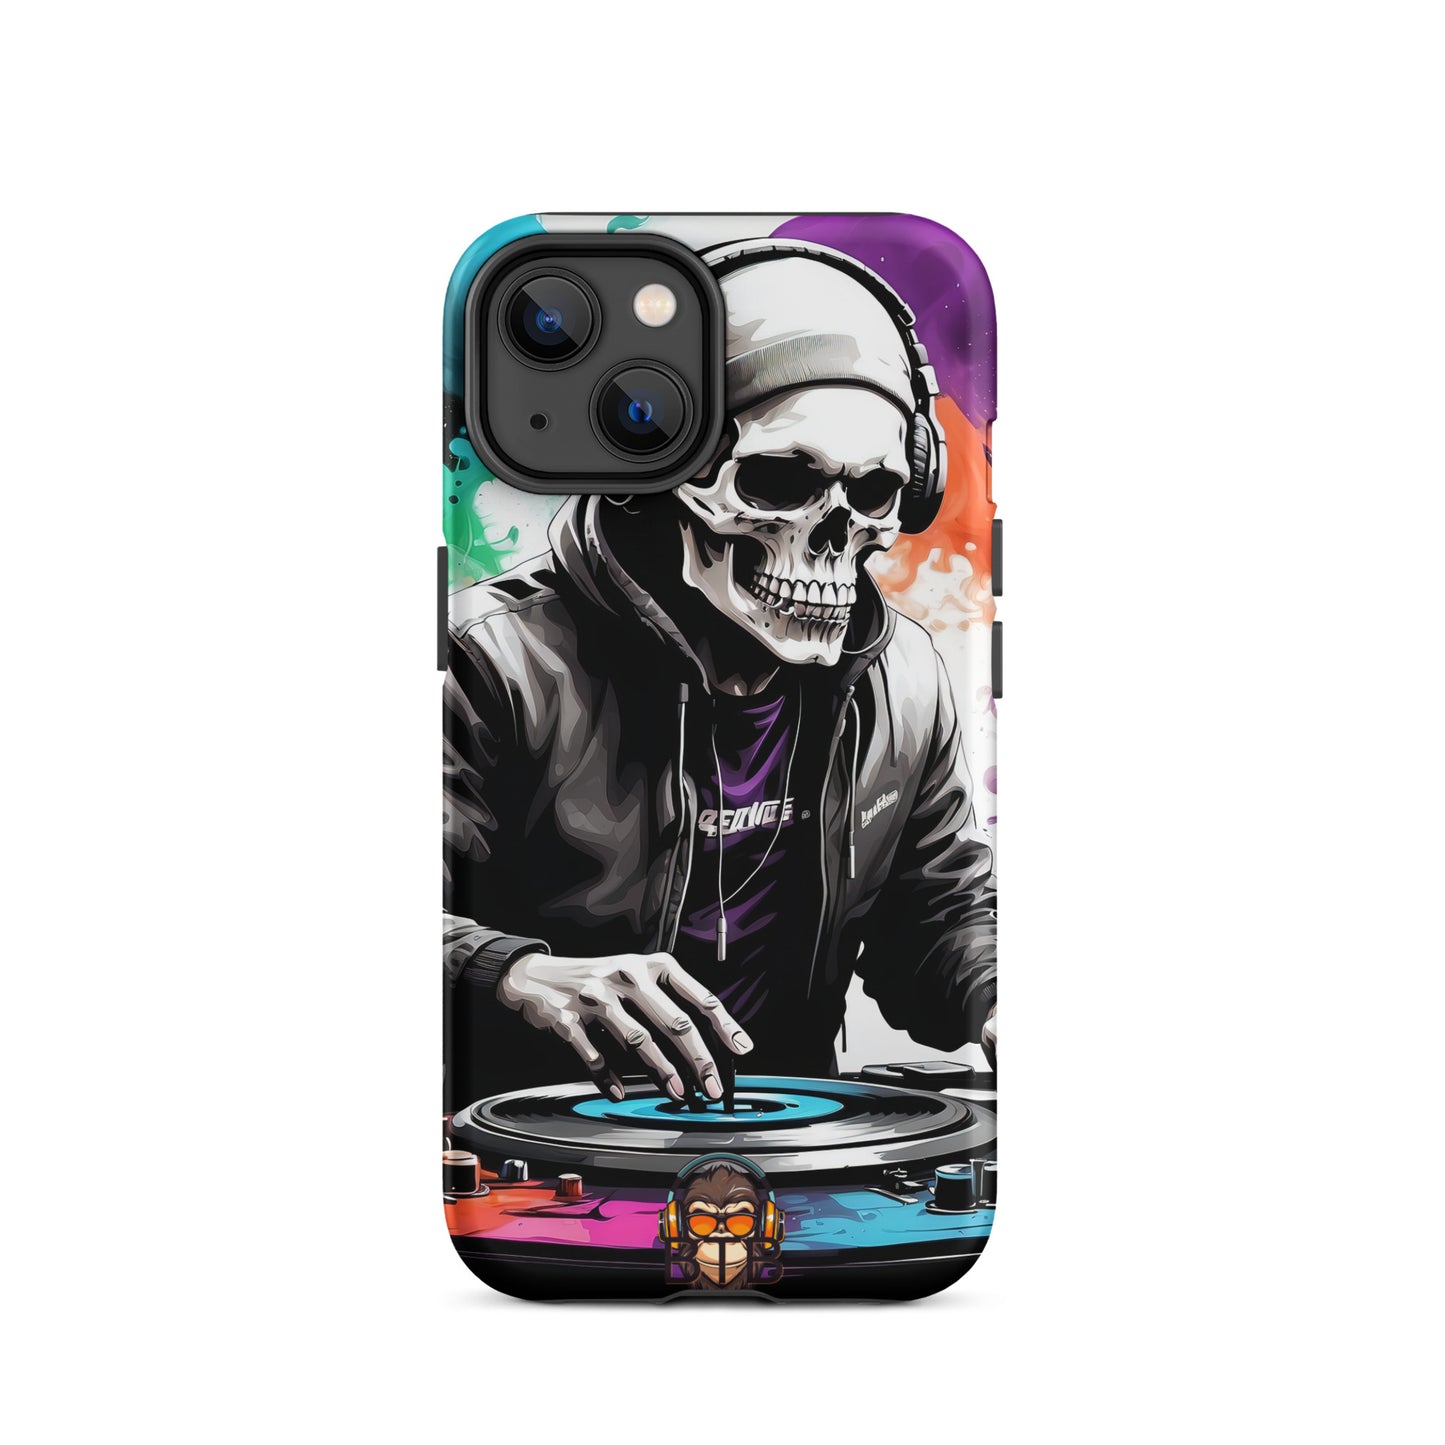 BTB "Deadly DJ" Tough Case for iPhone®